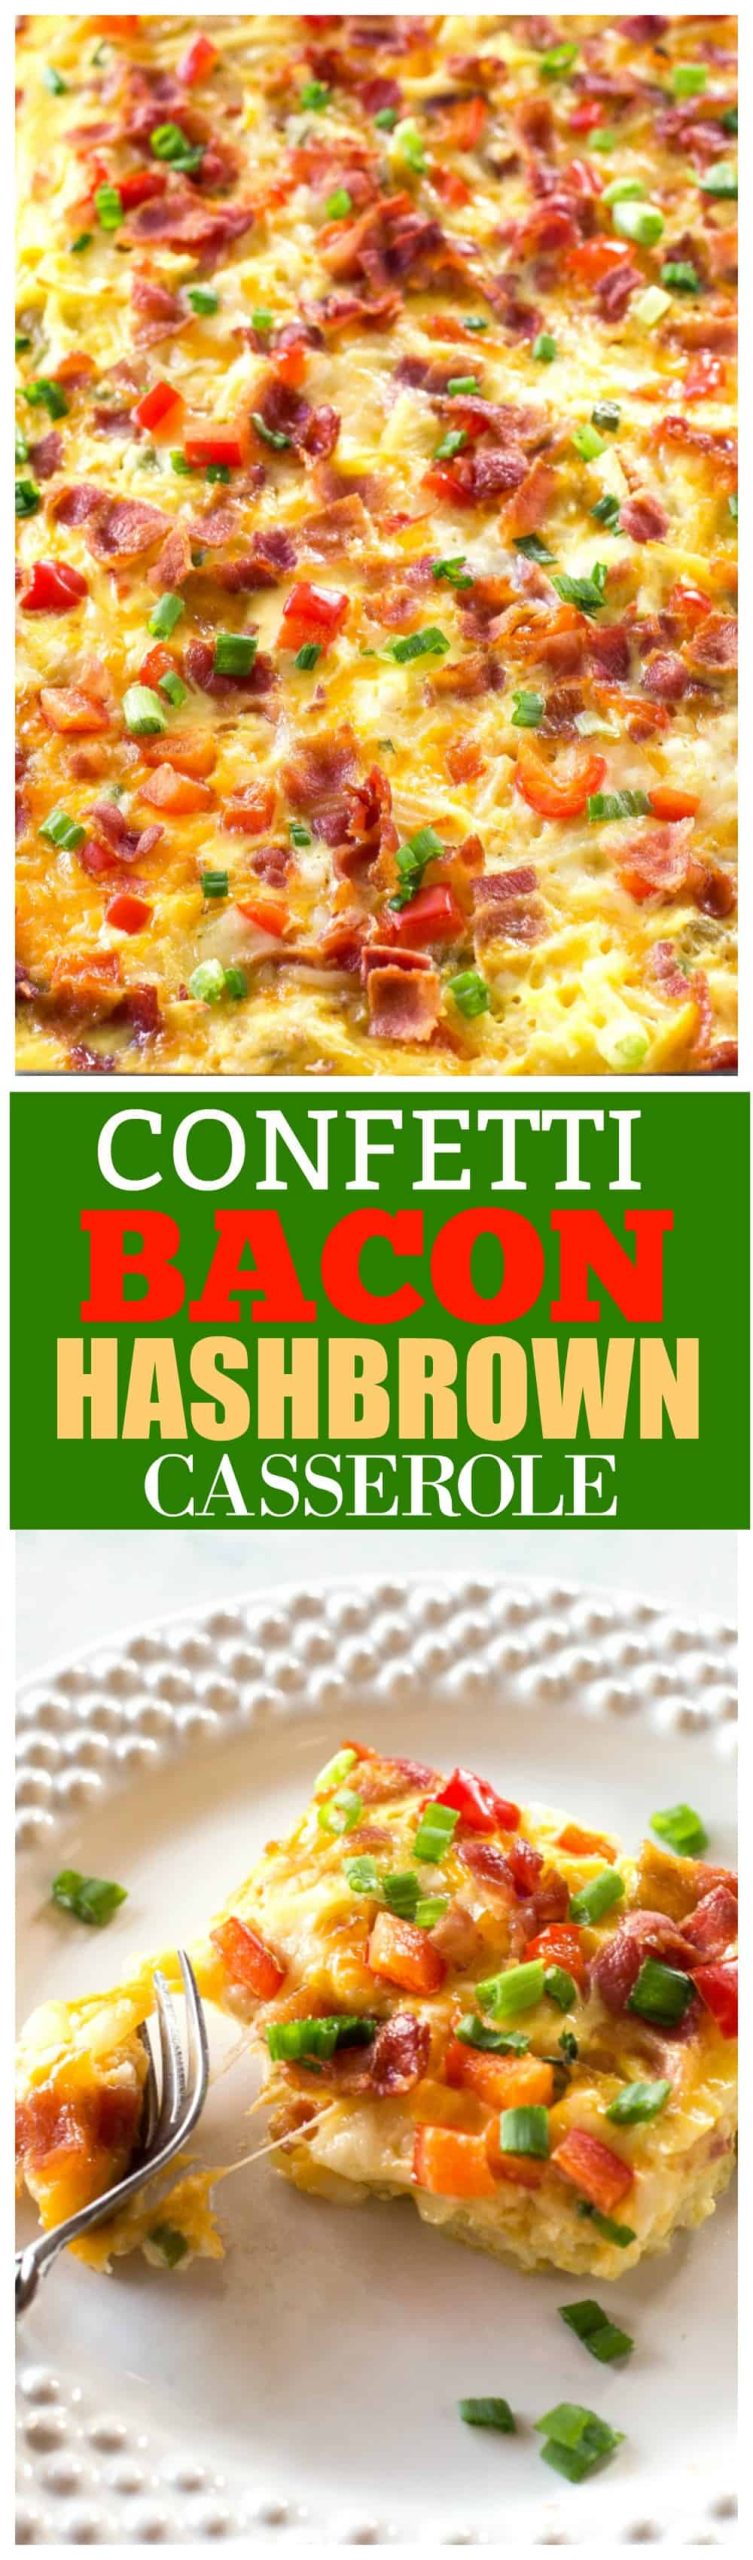 confetti bacon hashbrown casserole scaled - Confetti Bacon Hashbrown Casserole